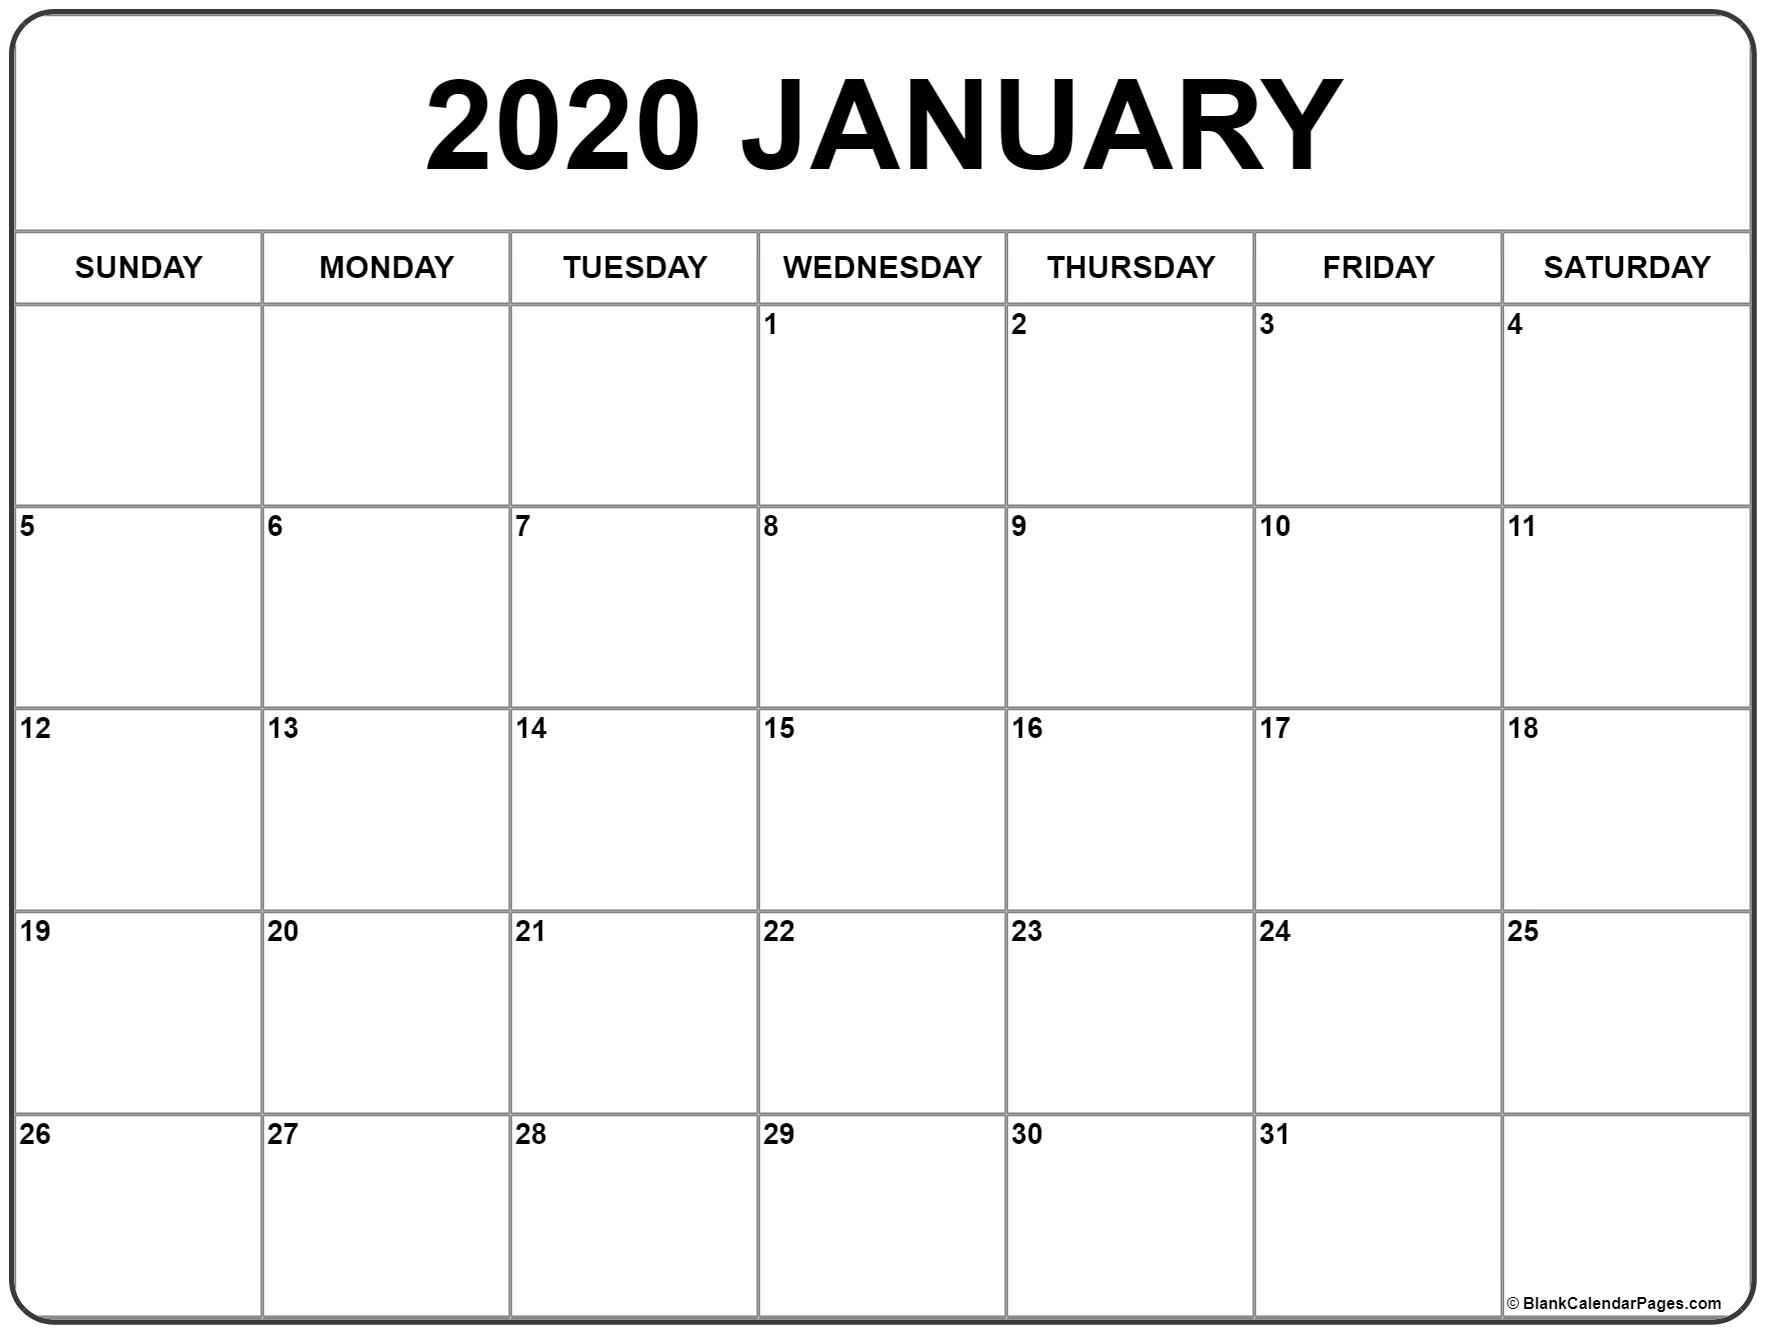 January 2020 Calendar | Free Printable Monthly Calendars-Printable Blank Calendar Pages Free 2020